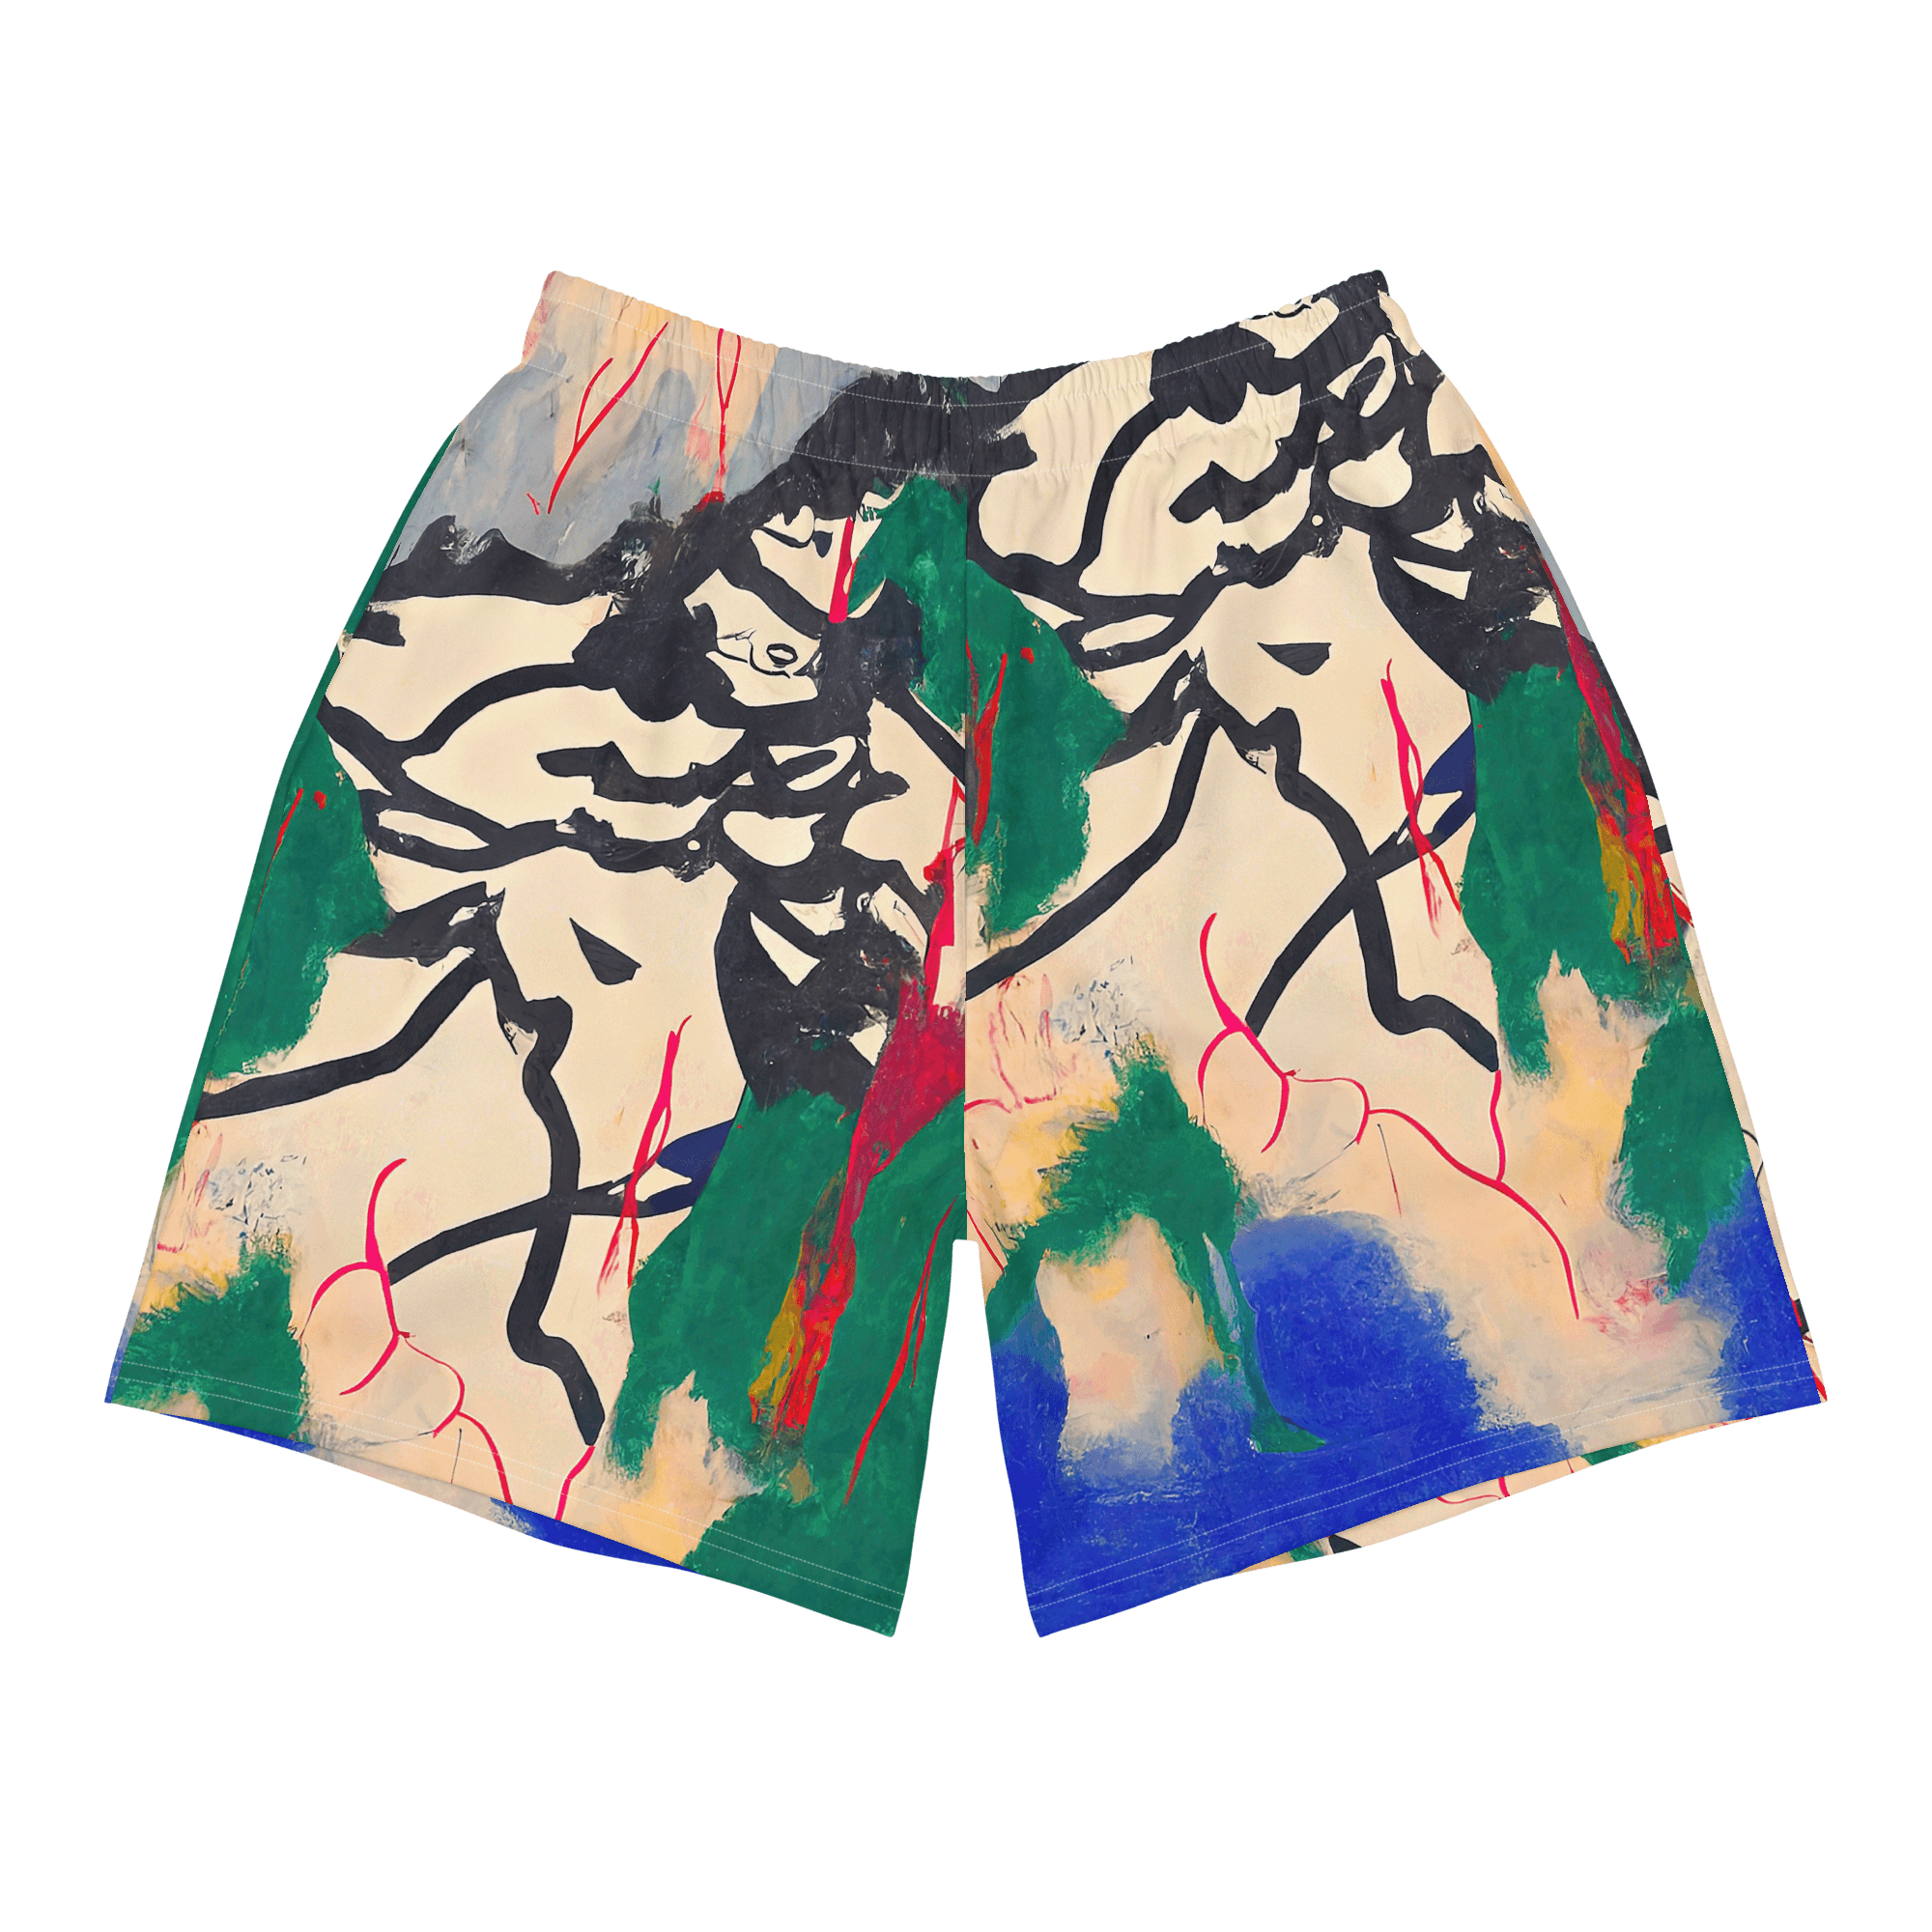 Terra Broken® Unisex Shorts (7/7 pieces for sale) - Kikillo Club